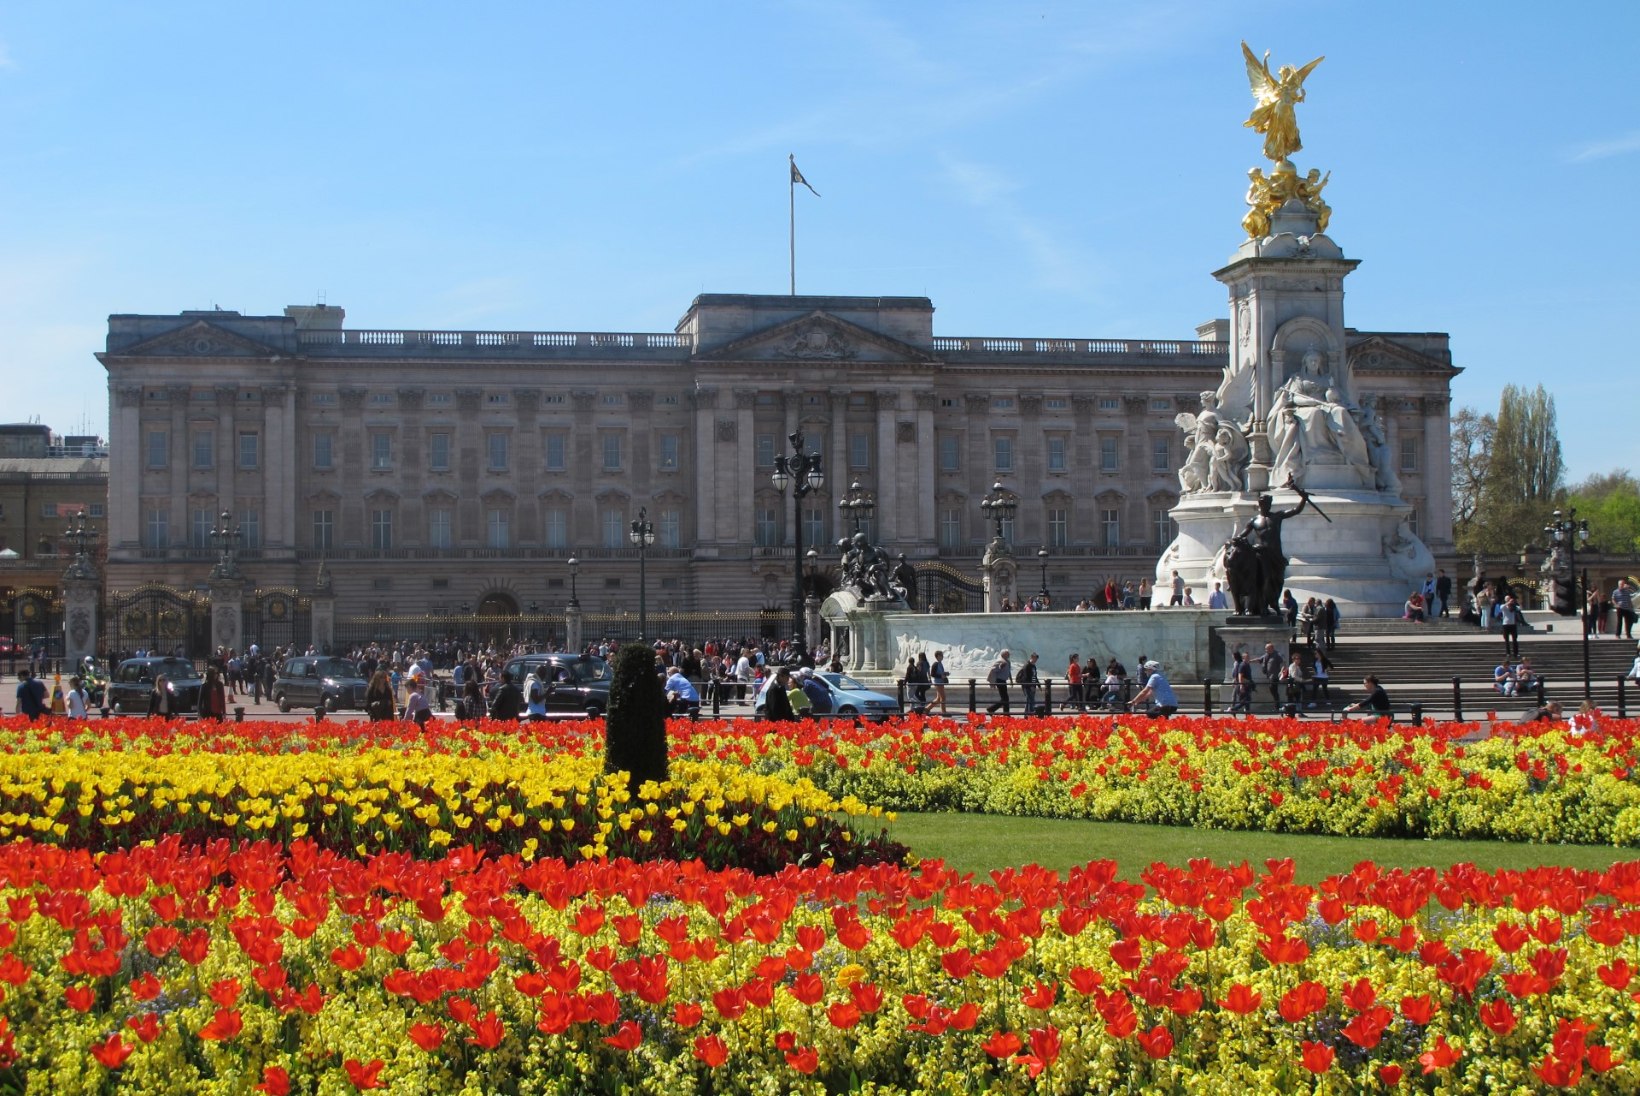 Buckinghami palee remont maksab 369 miljonit